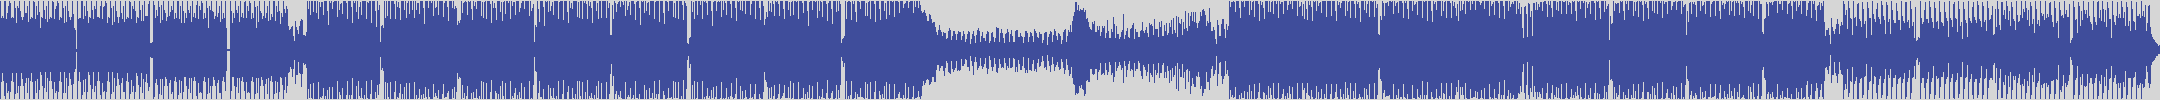 nf_boyz_records [NFY022] The Chicago Boyz - Dangeroom [Billie Mix] audio wave form